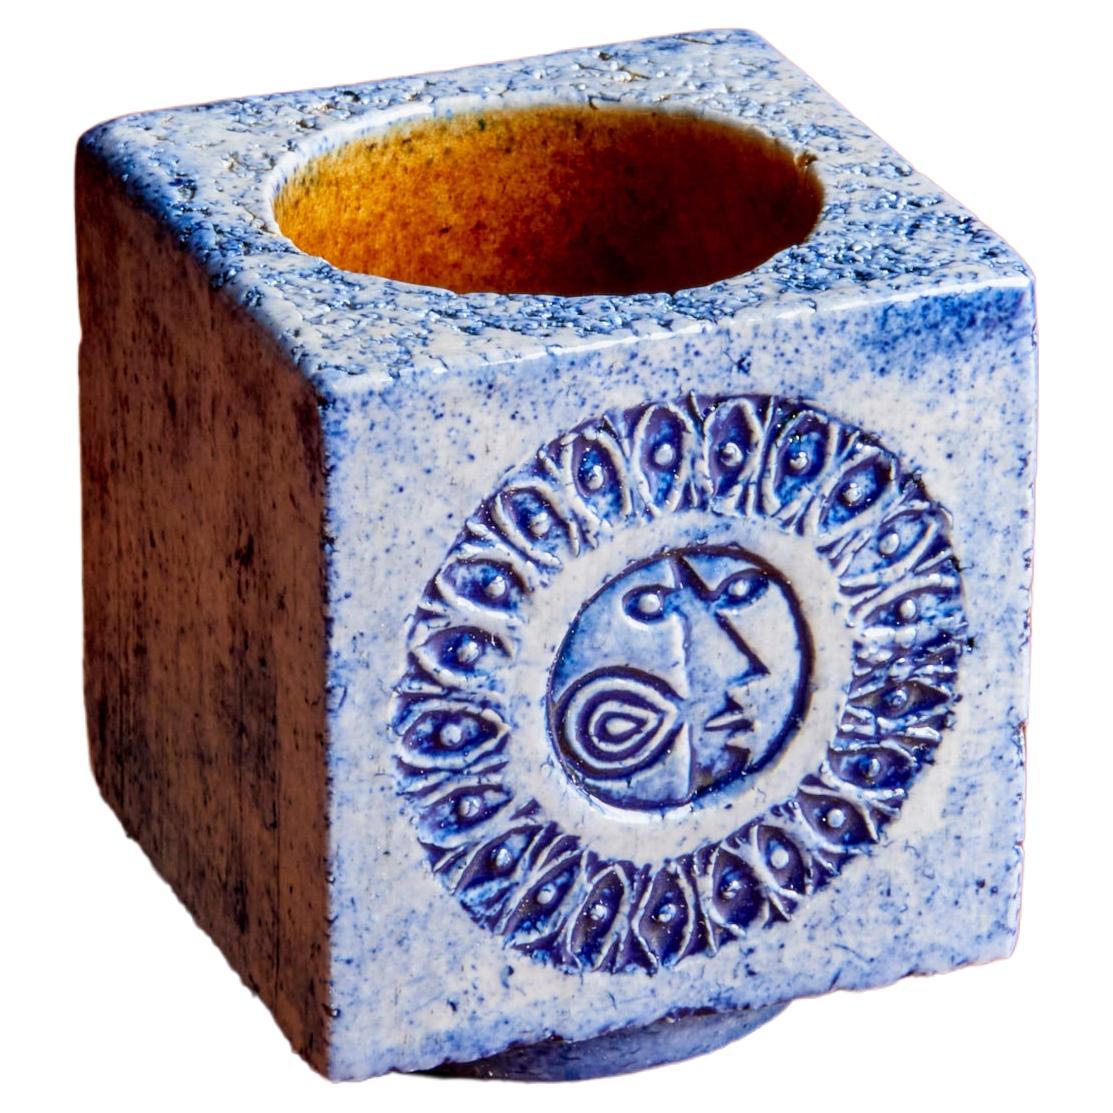 Roger Capron 1 of 22 Blue Ceramic Vases, France - 1950s, Labeled 